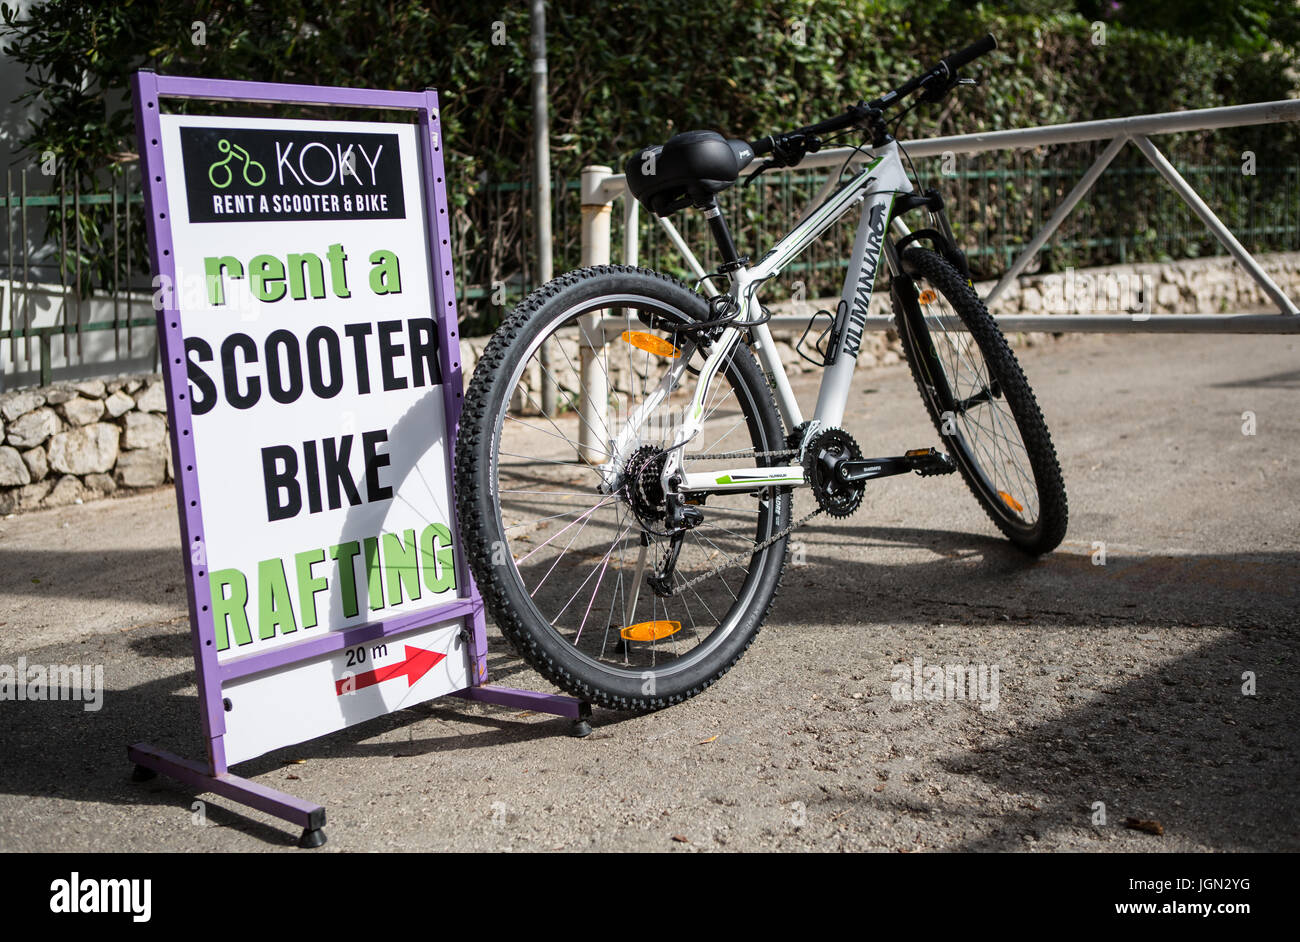 Croatia Bike Rental Stockfotos und -bilder Kaufen - Alamy